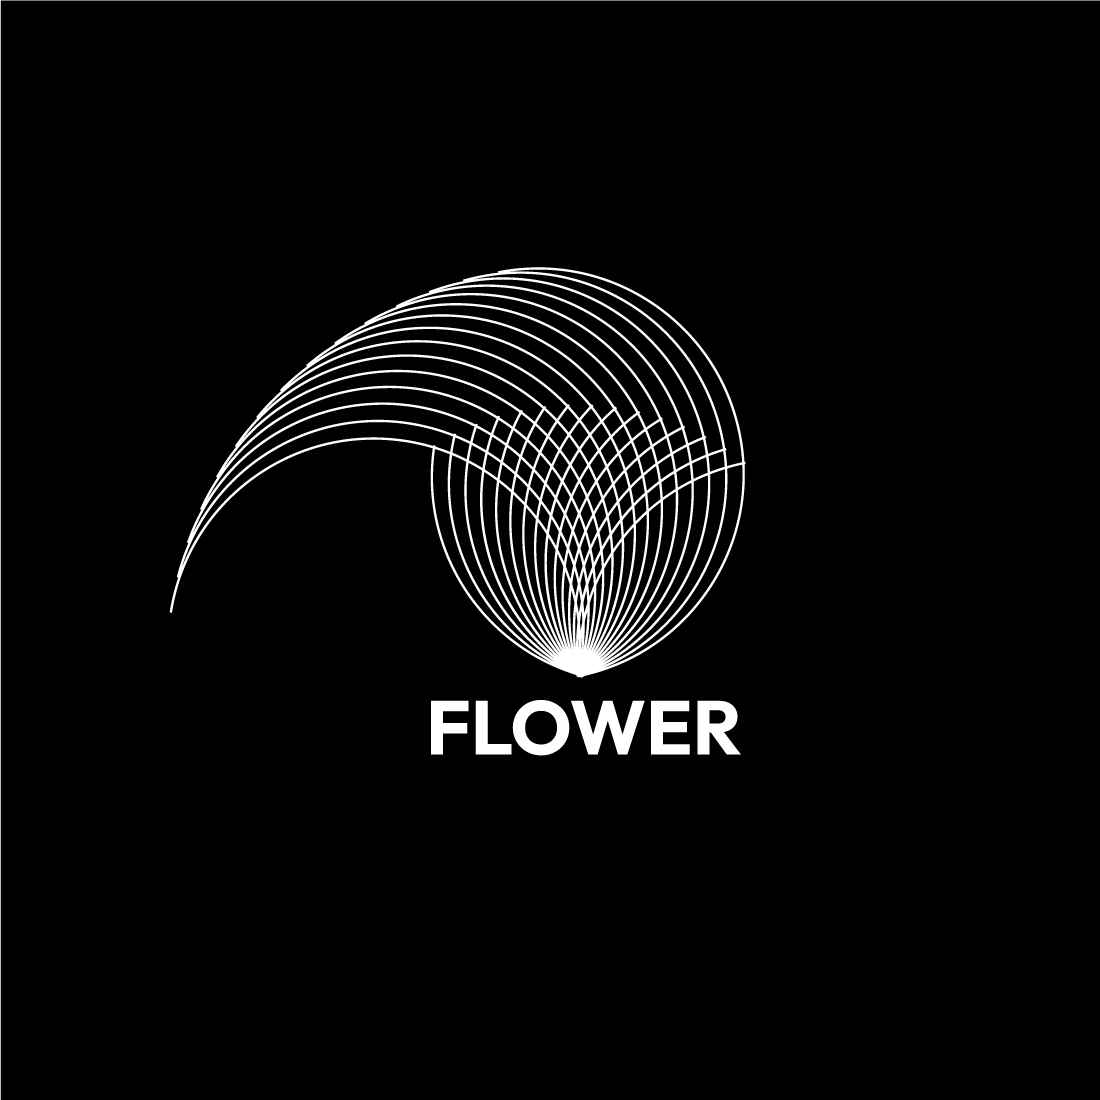 Elegant Line Art Flower Logo: Beauty & Fashion Design preview image.